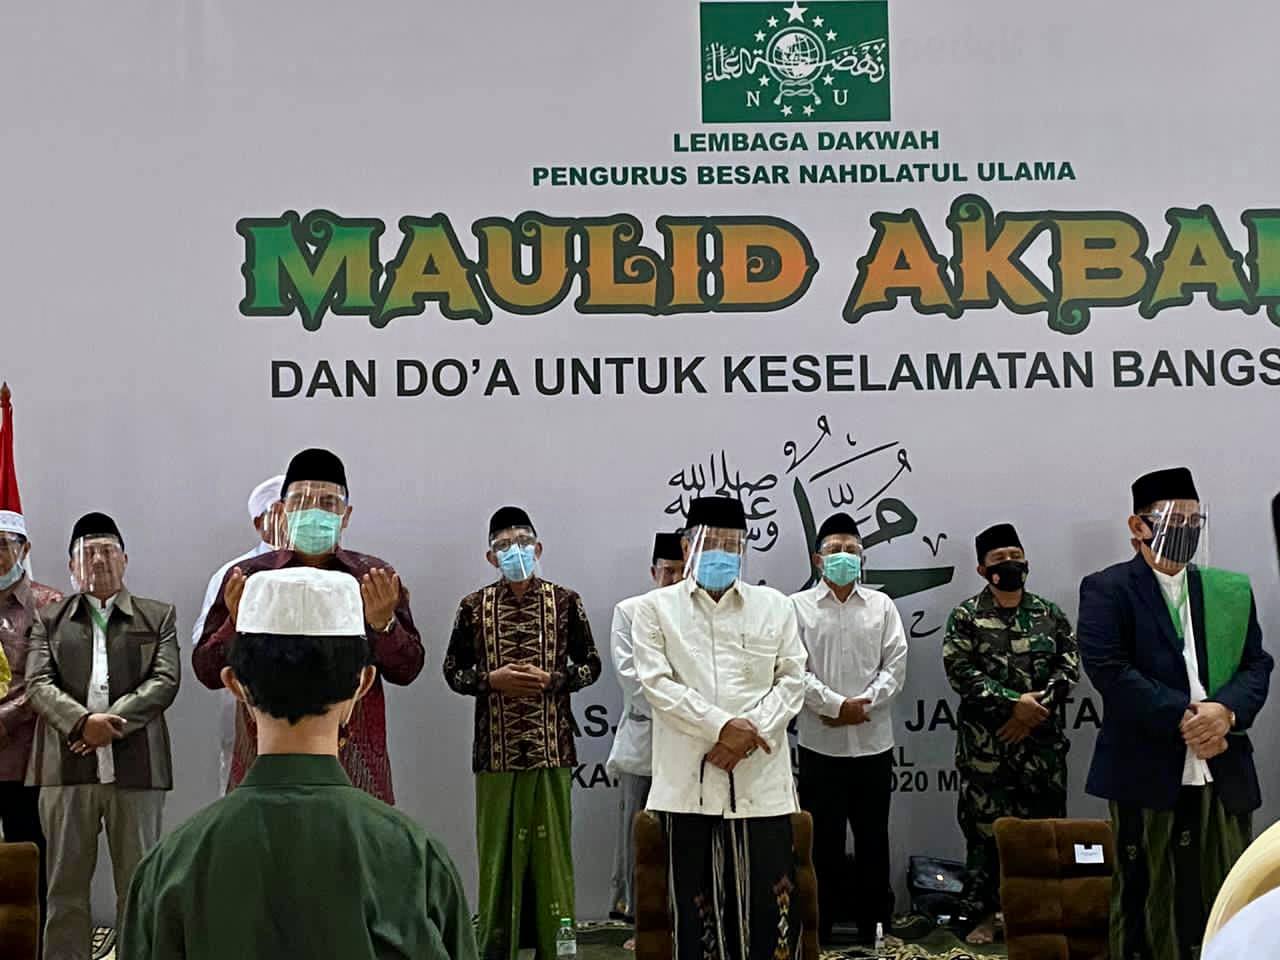 Maulid Akbar dan Doa untuk Bangsa di Masjid Istiqlal Jakarta, Kamis 29 Oktober 2020. (Foto: pbnu)